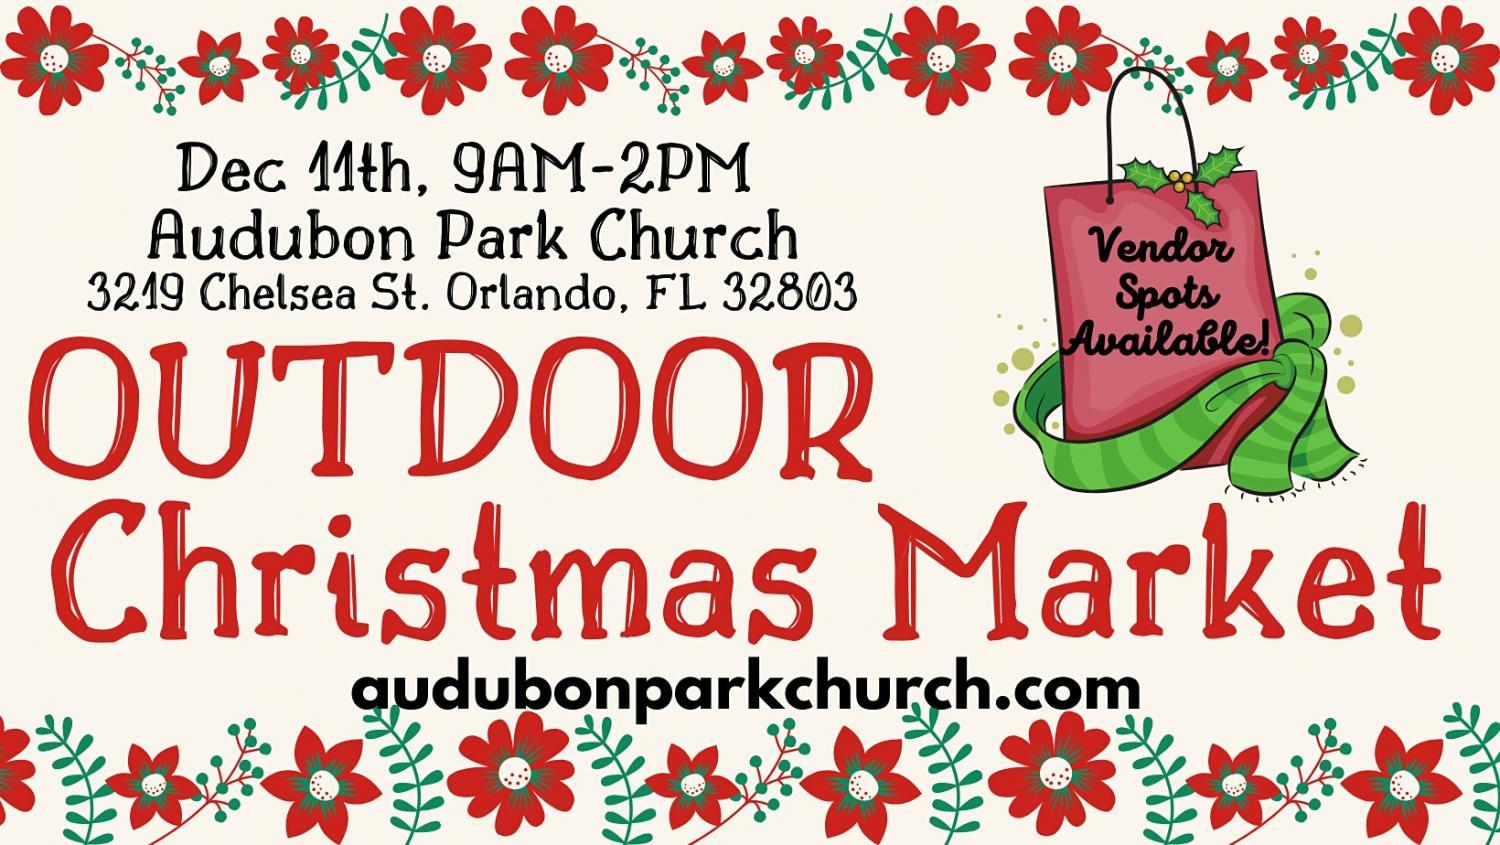 Christmas Outdoor Market Booth Space Rental at Audubon Park Church